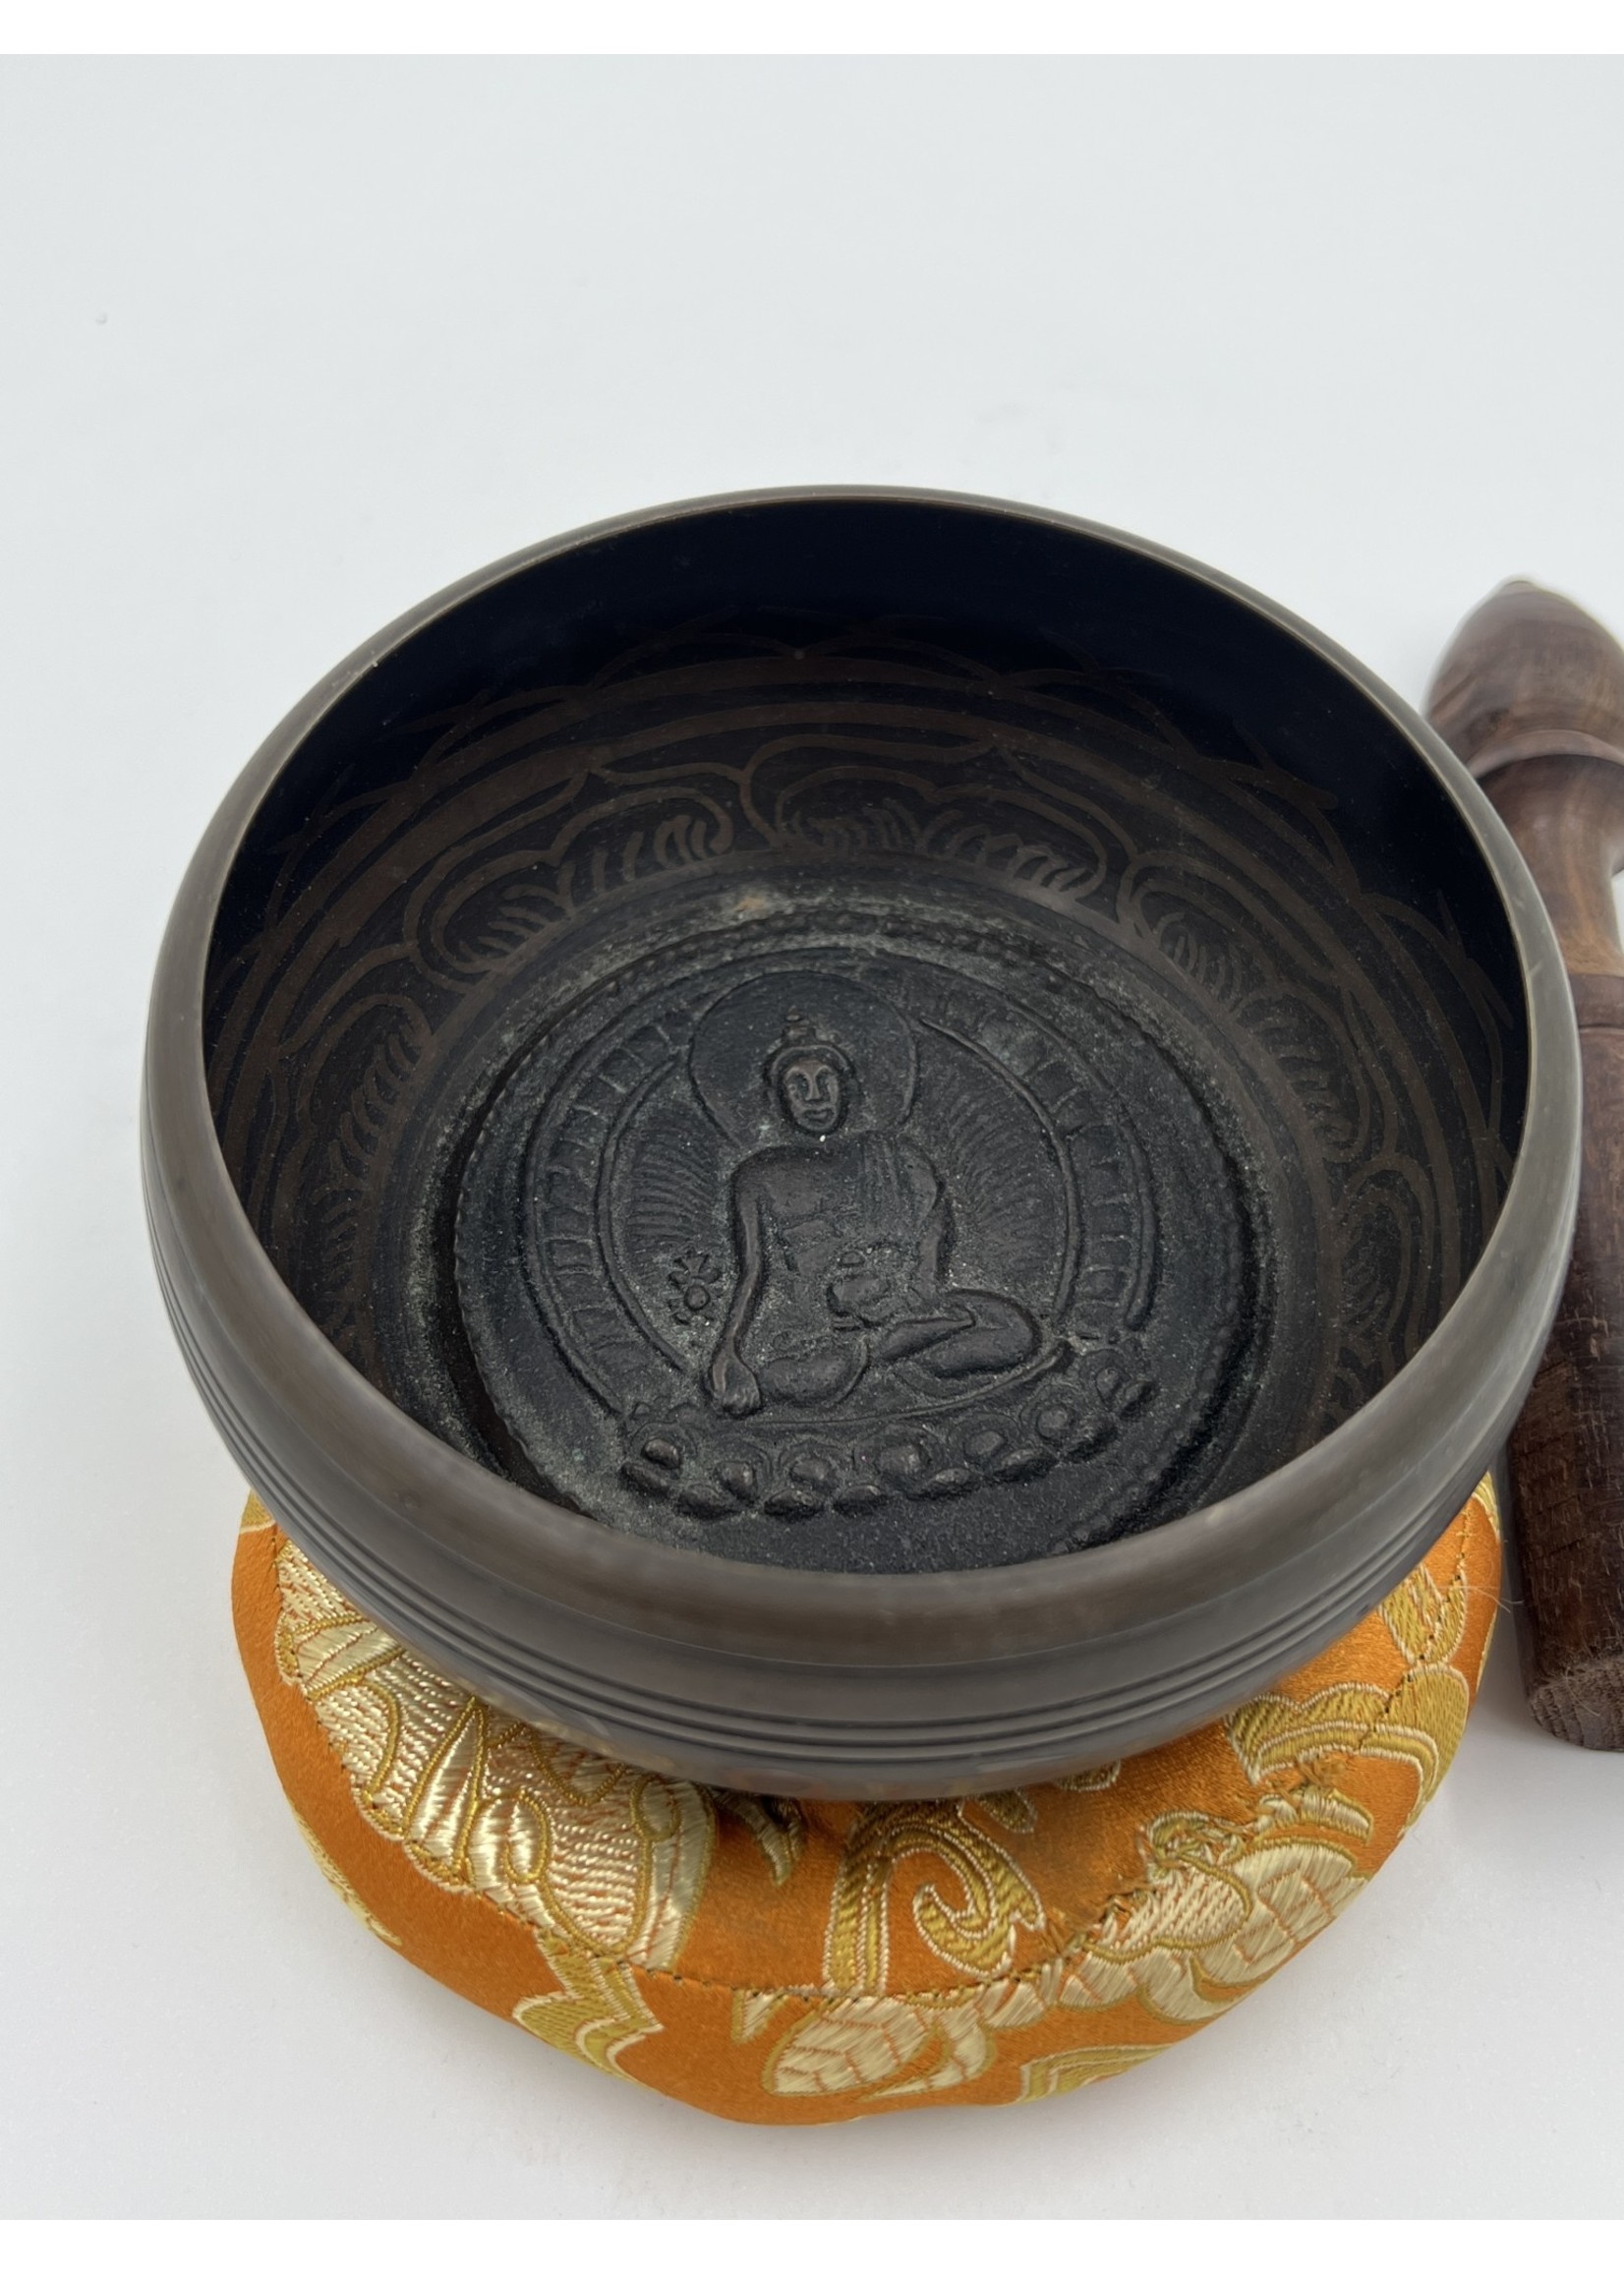 Other Things Himalayan Singing Bowl Buddha Design In Bowl